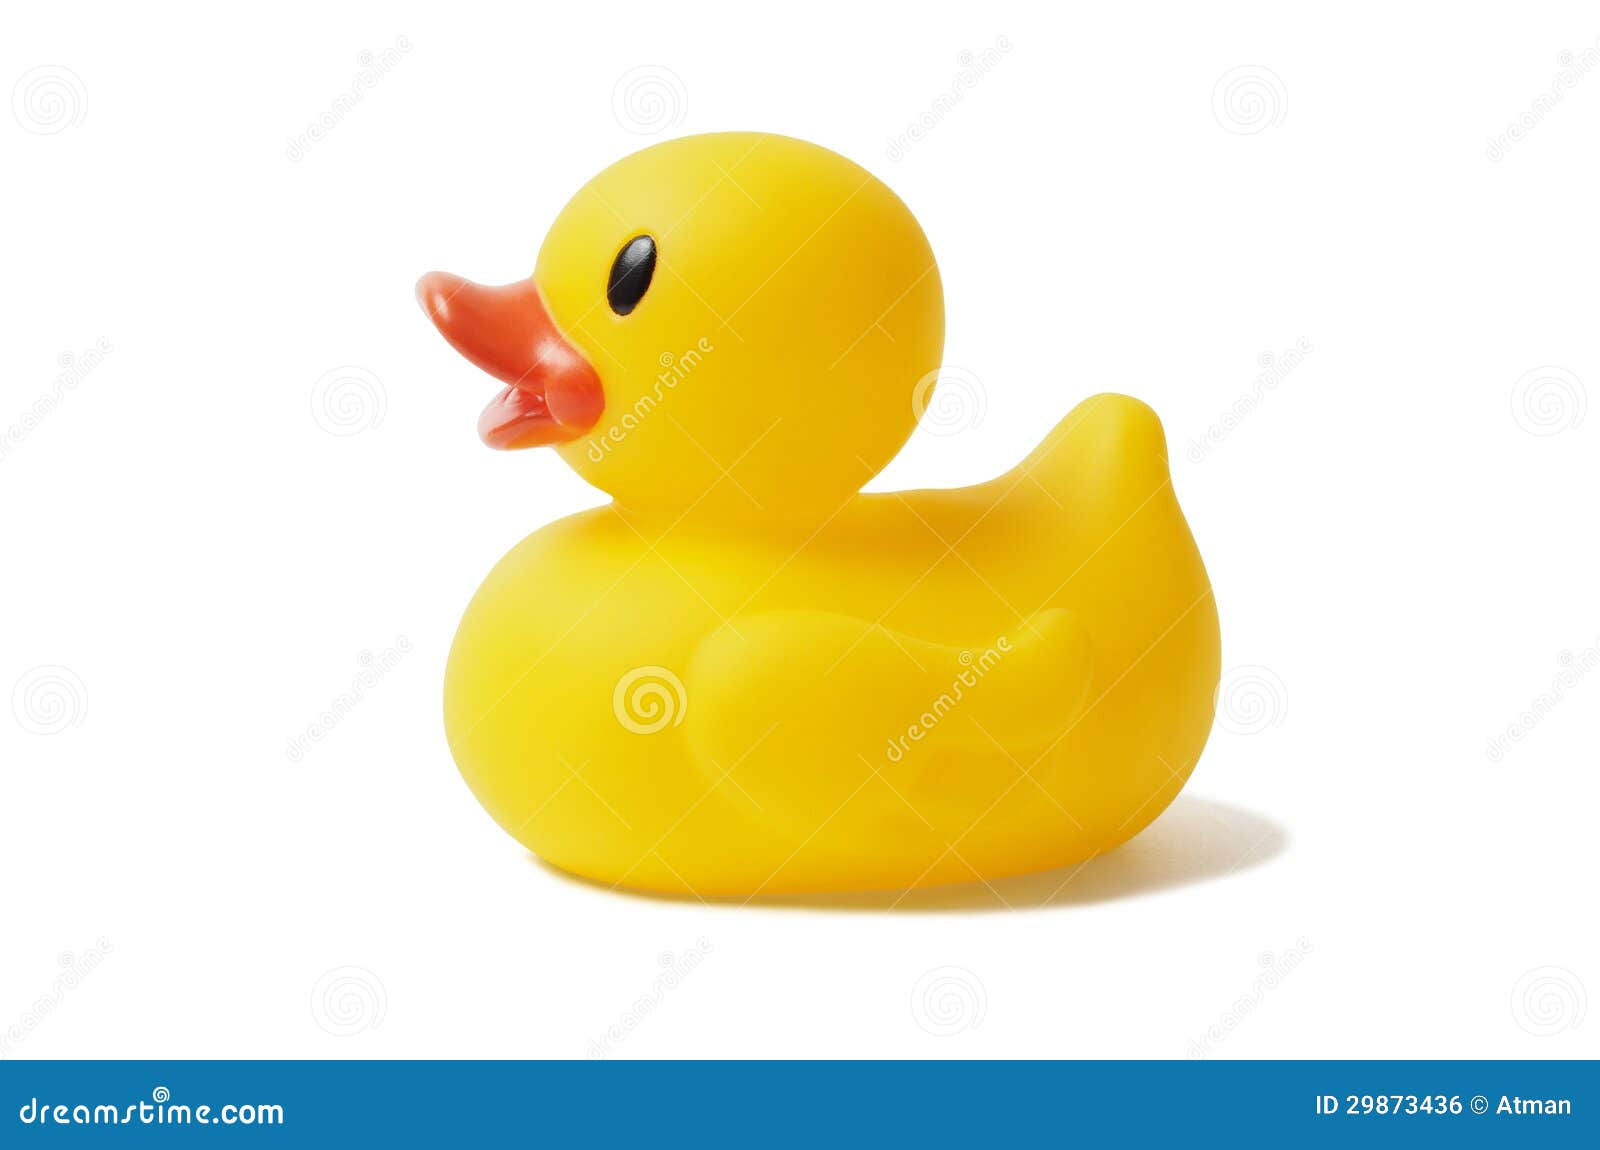 rubber duck